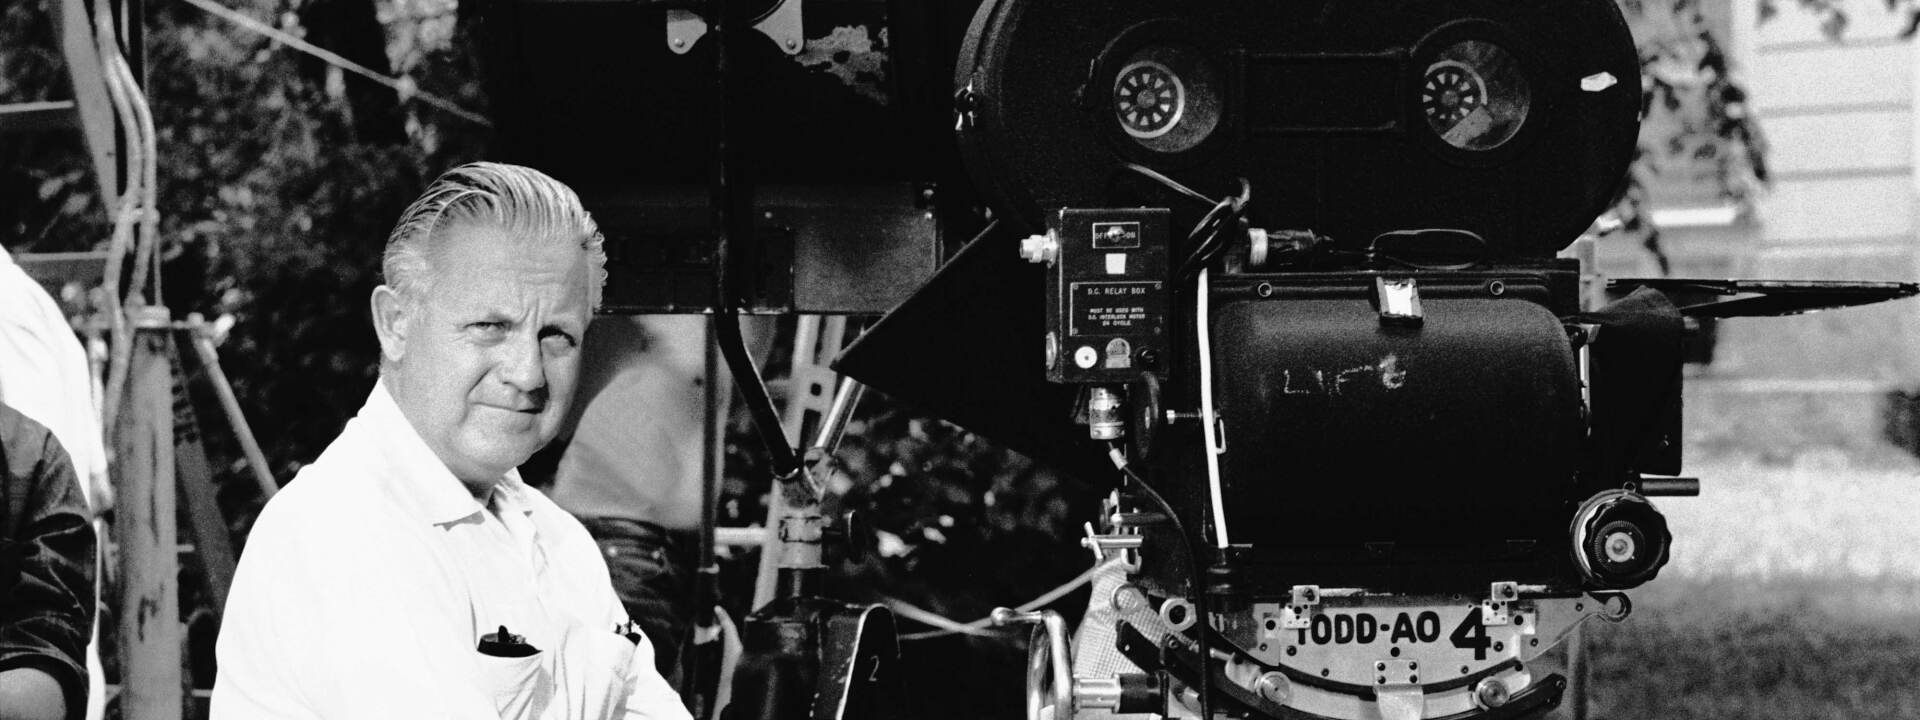 Dreharbeiten The Sound of Music film - Robert Wise © akg images / Erich Lessing 